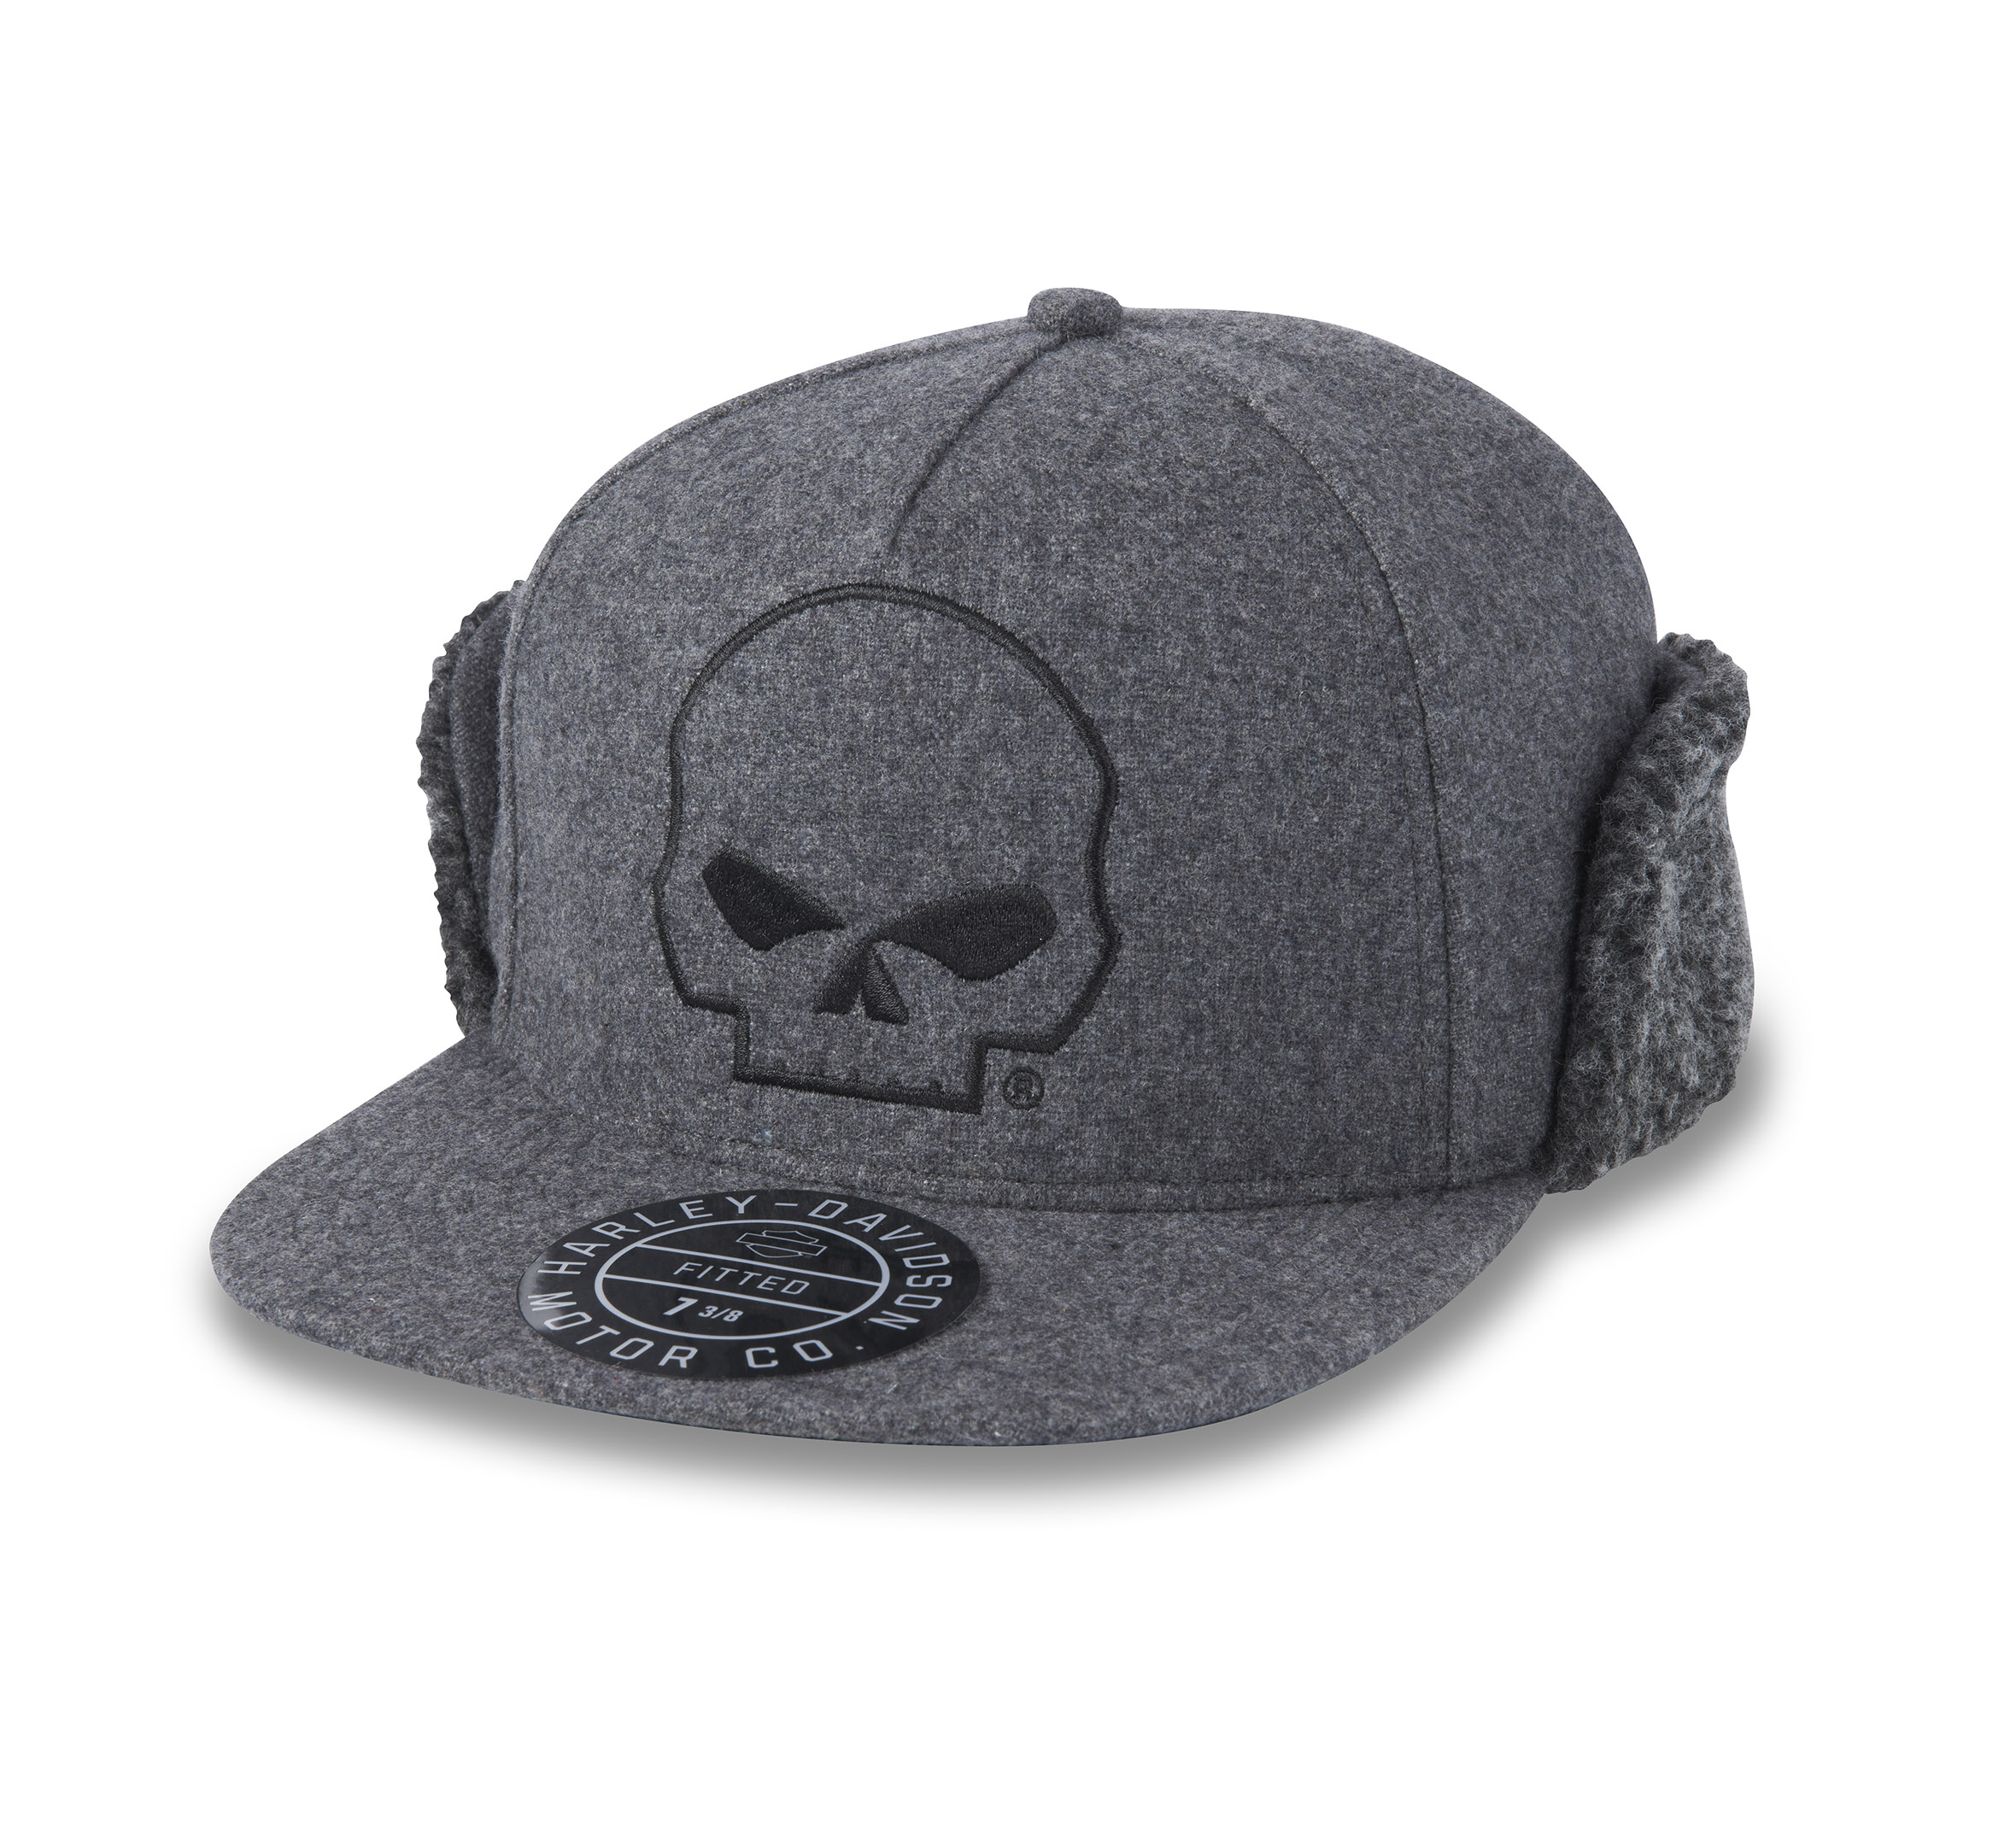 Carhartt mens Force Louisville Hat skull caps, Black, One Size US